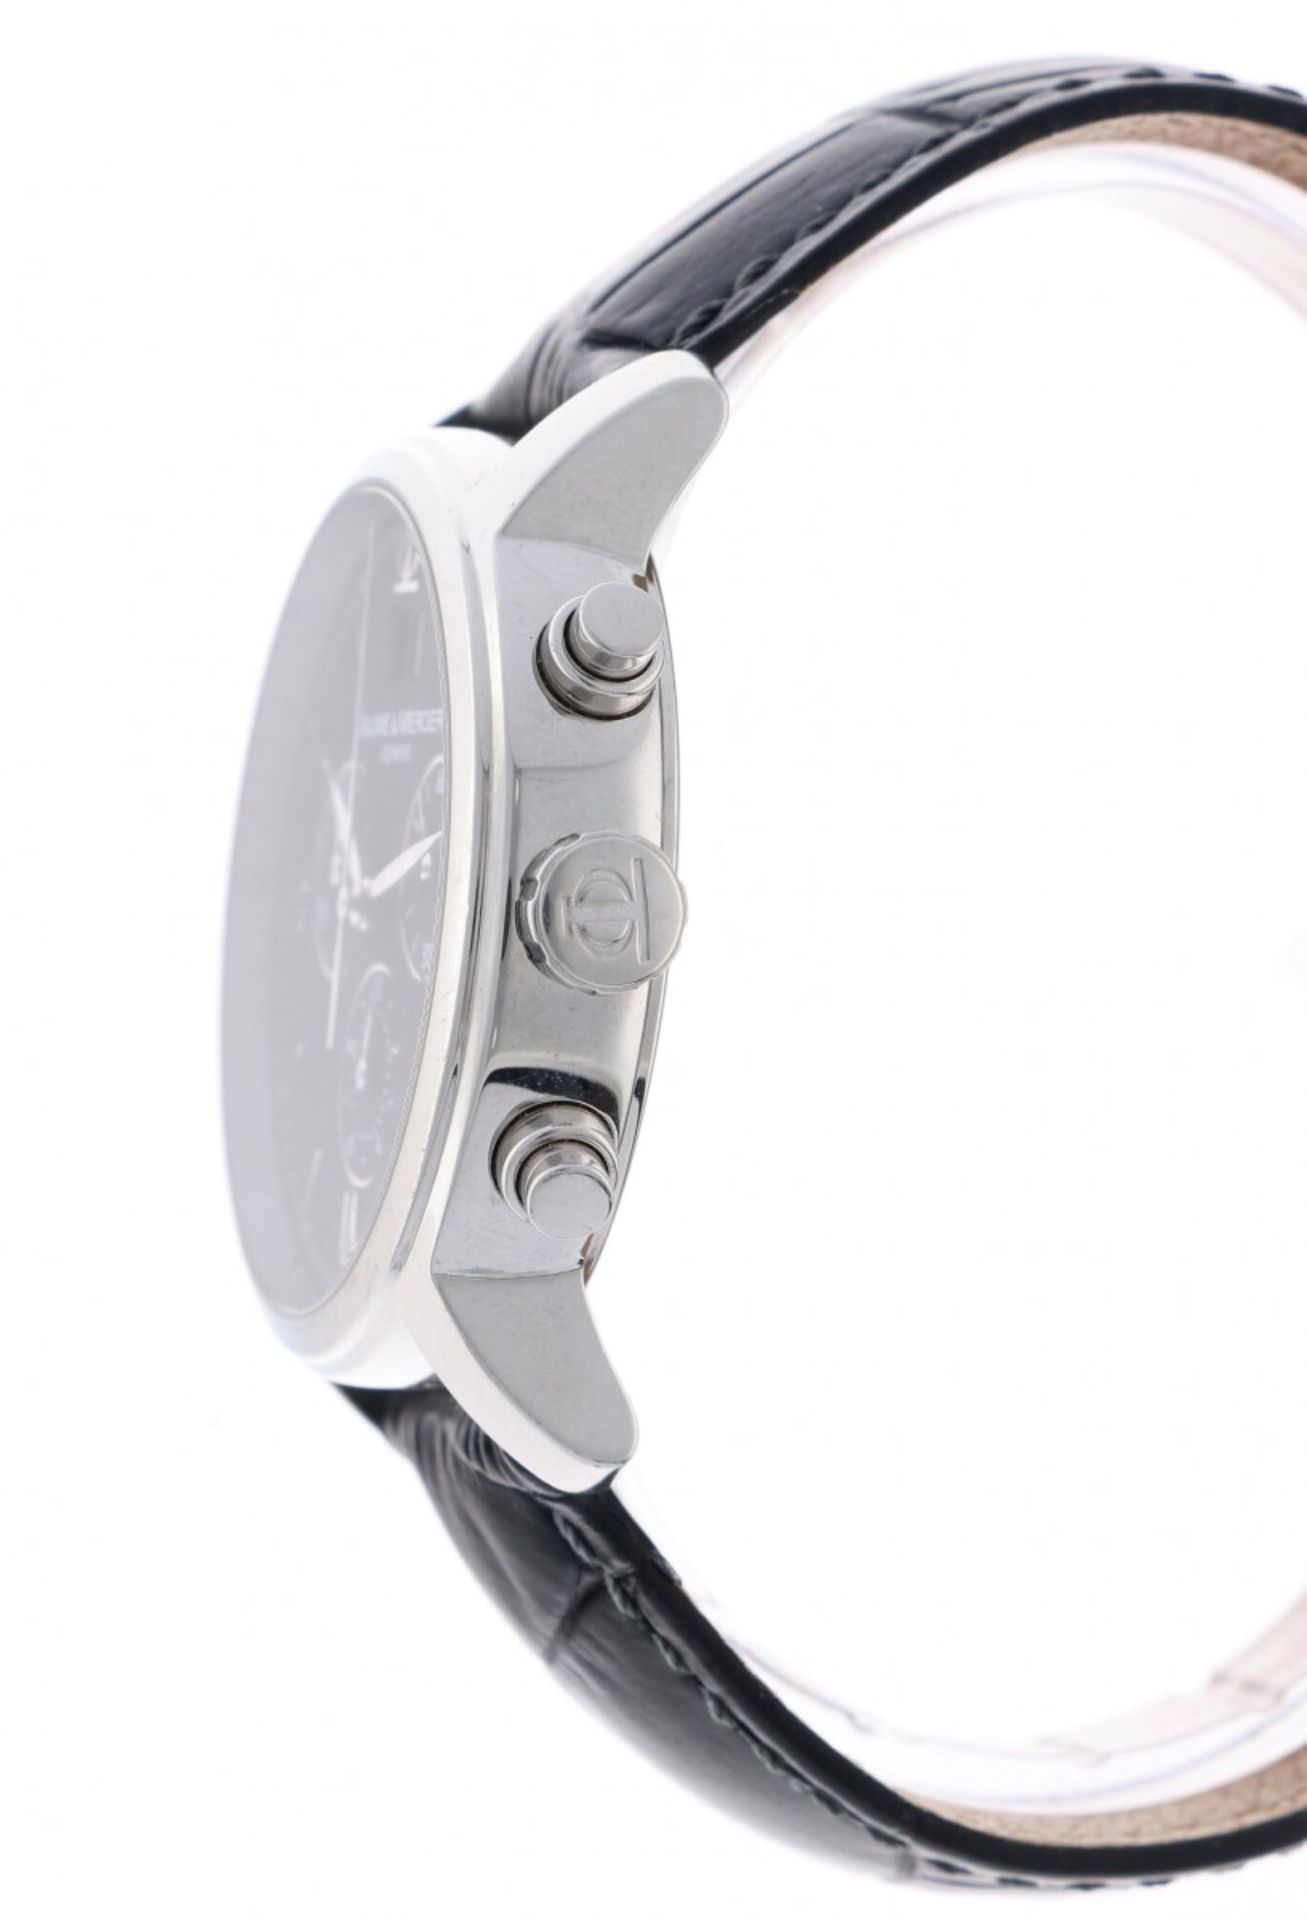 Baume & Mercier Classima Chronograph 65538 - Men's watch - ca. 2011 - Image 5 of 5